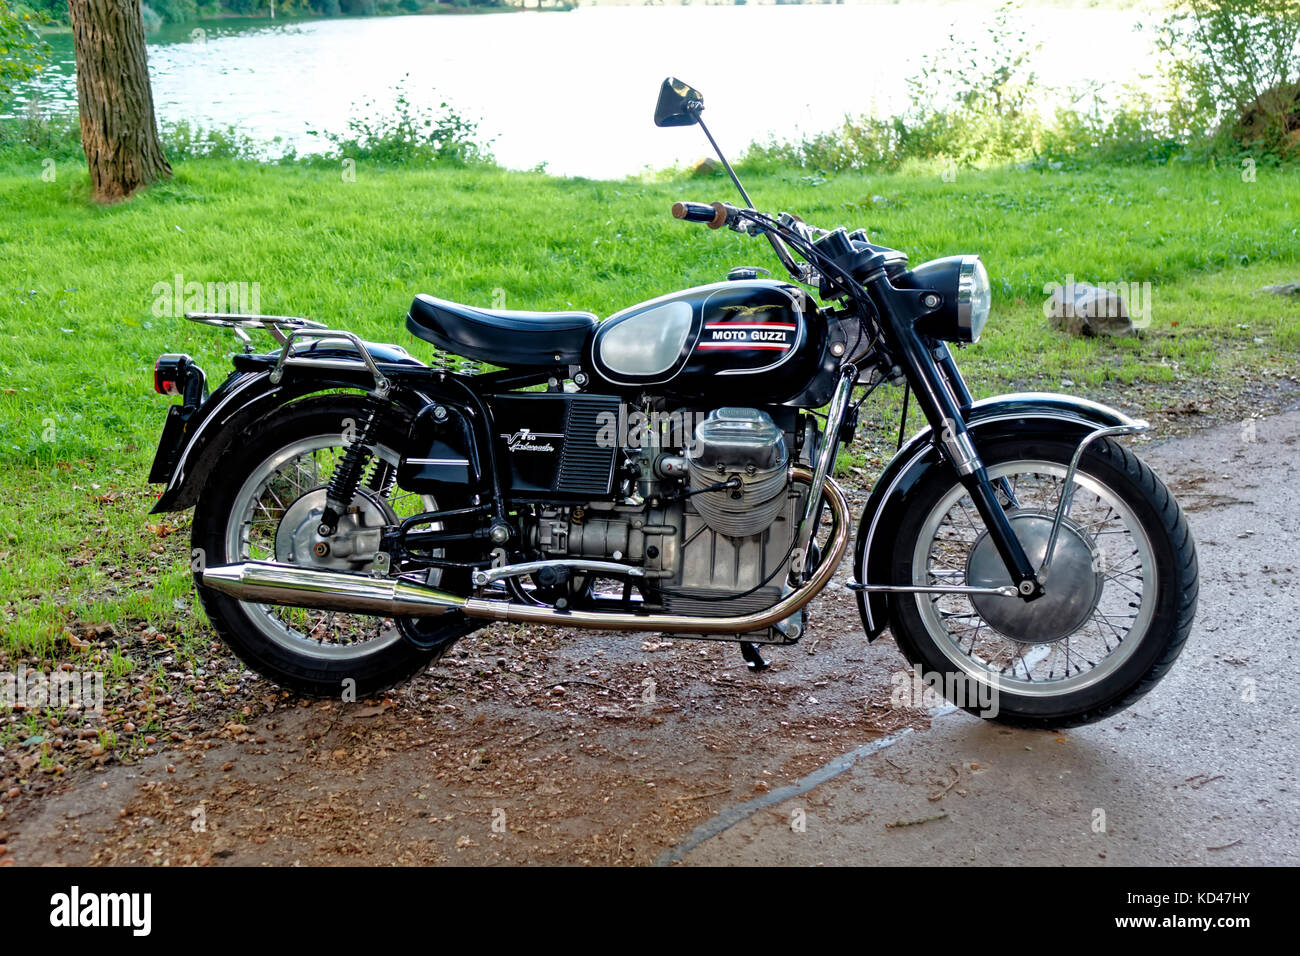 Ambassador Motorbike High Resolution Stock Photography and Images - Alamy